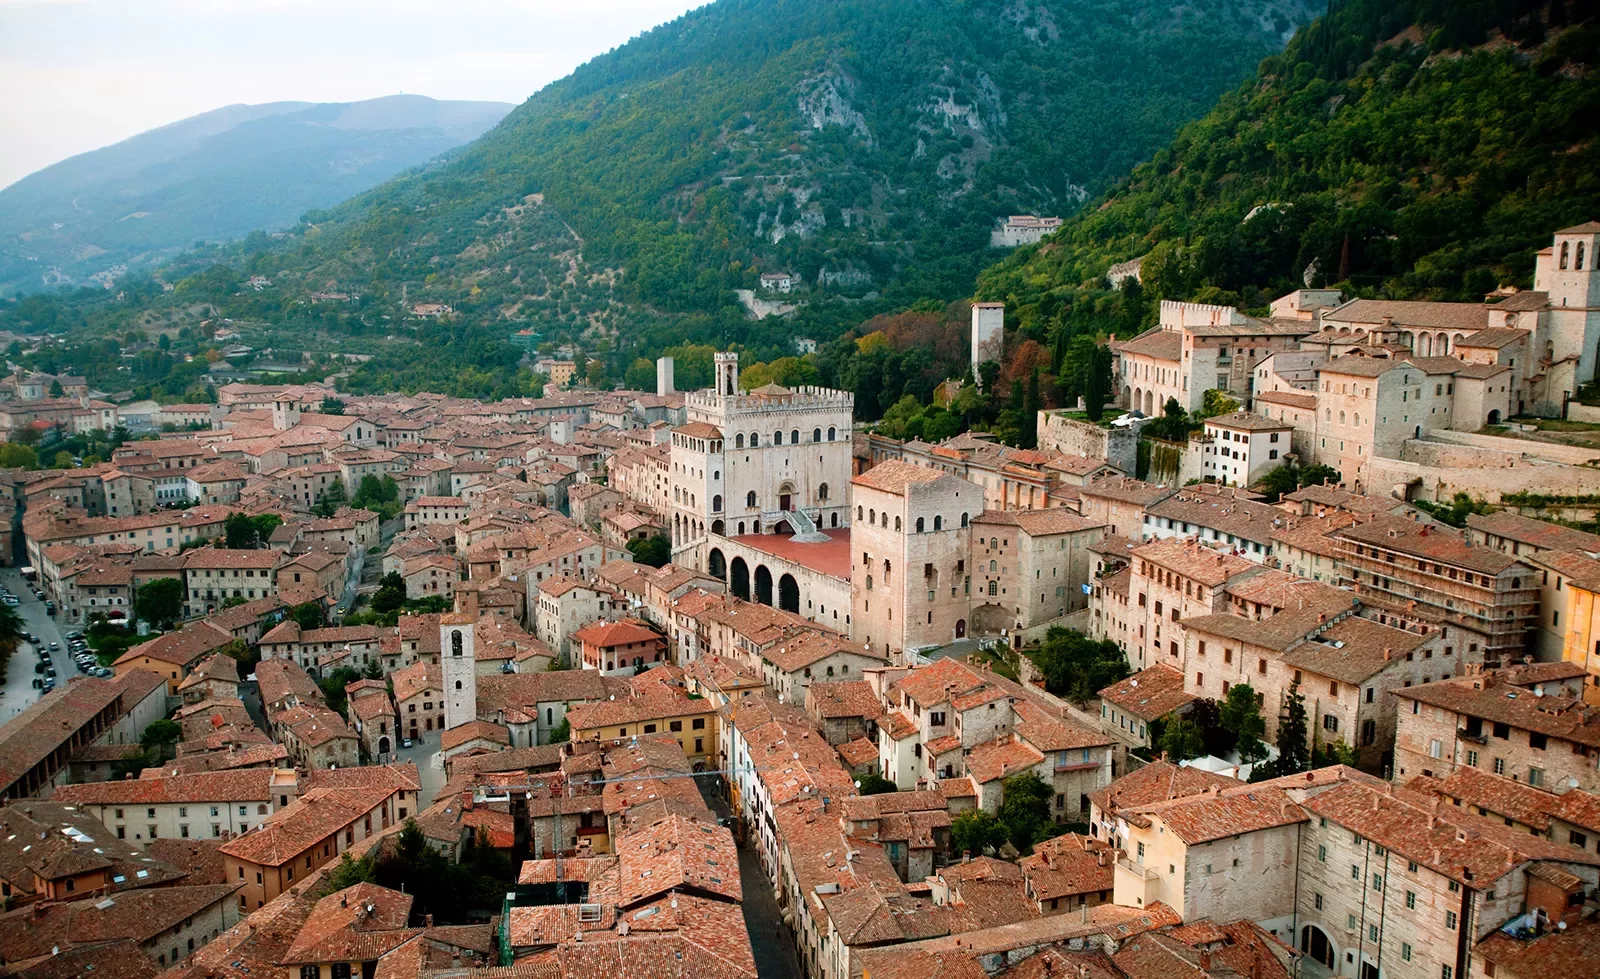 Wide shot of Italian town in valley, terracotta roofing, sandstone brick.